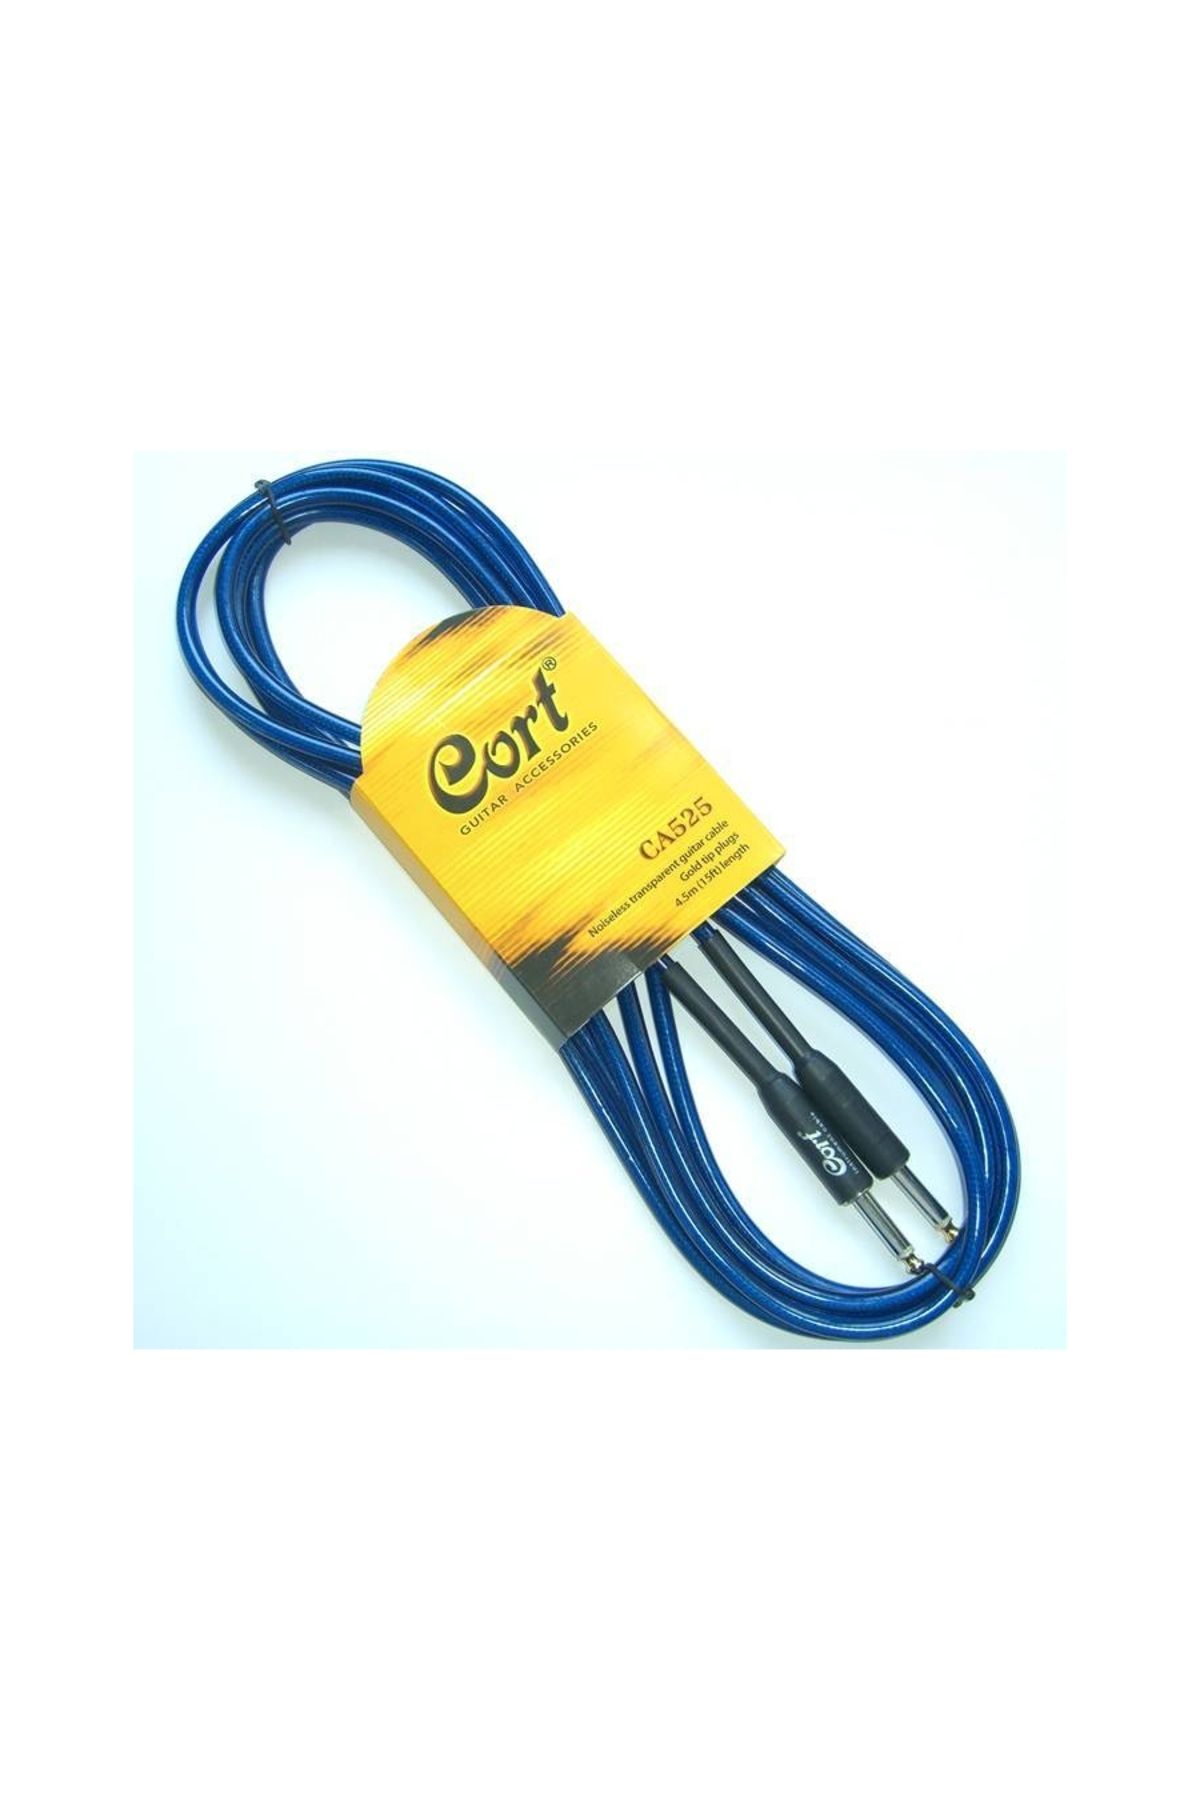 Cort Ca525bl Enstrüman Kablo 4.5m Mavi